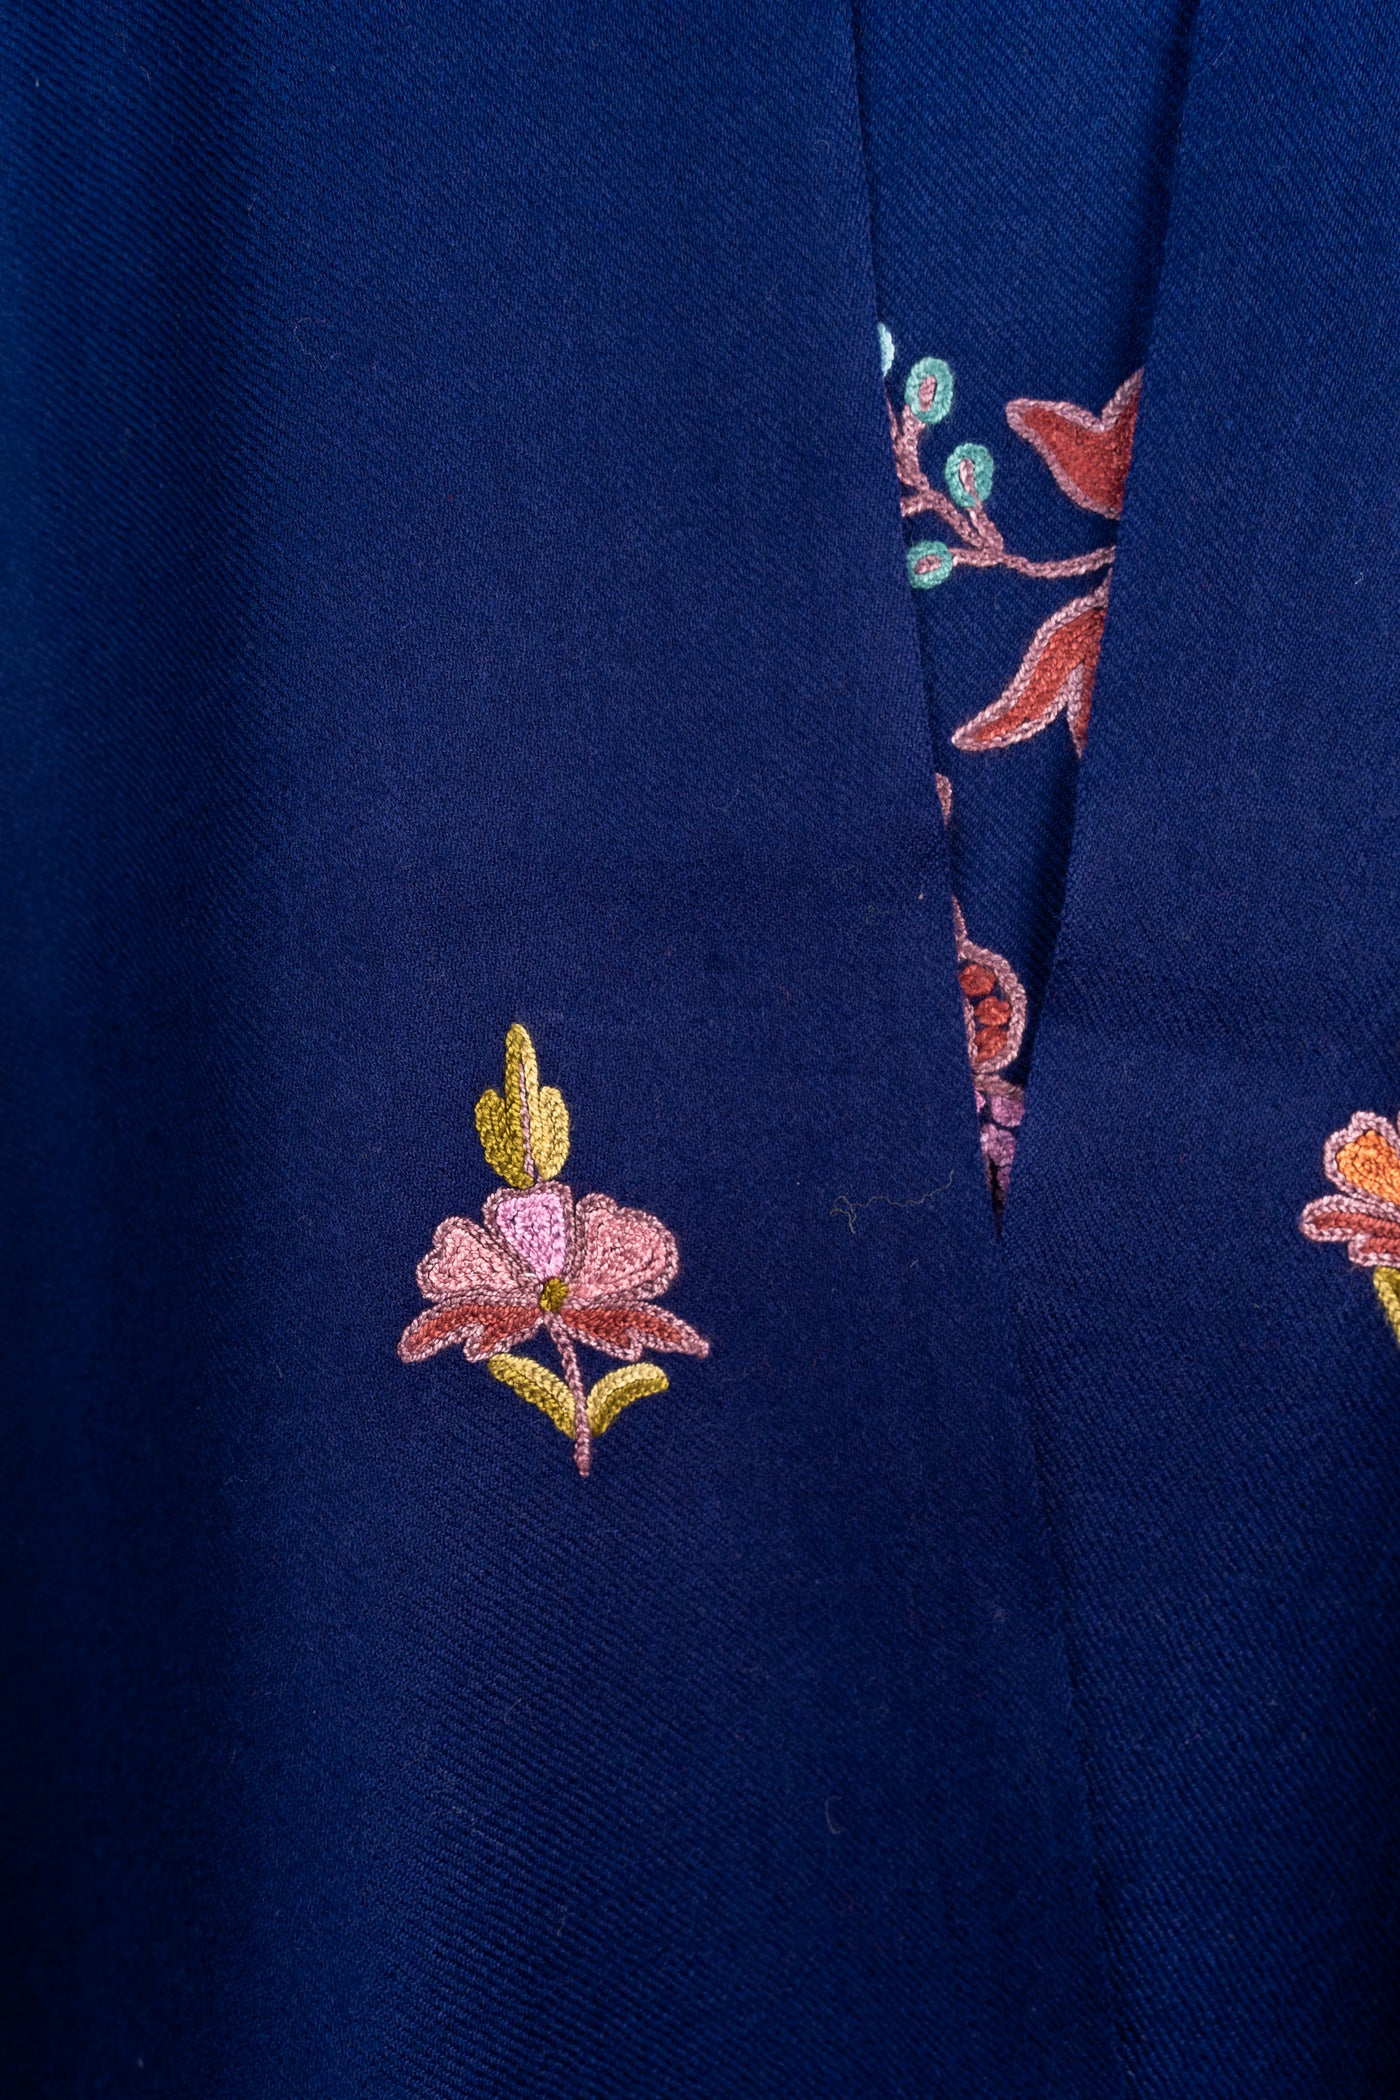 Sham-e-Aari: Kashmiri Hand Embroidered Midnight Suit with Hand Aari Embroidery